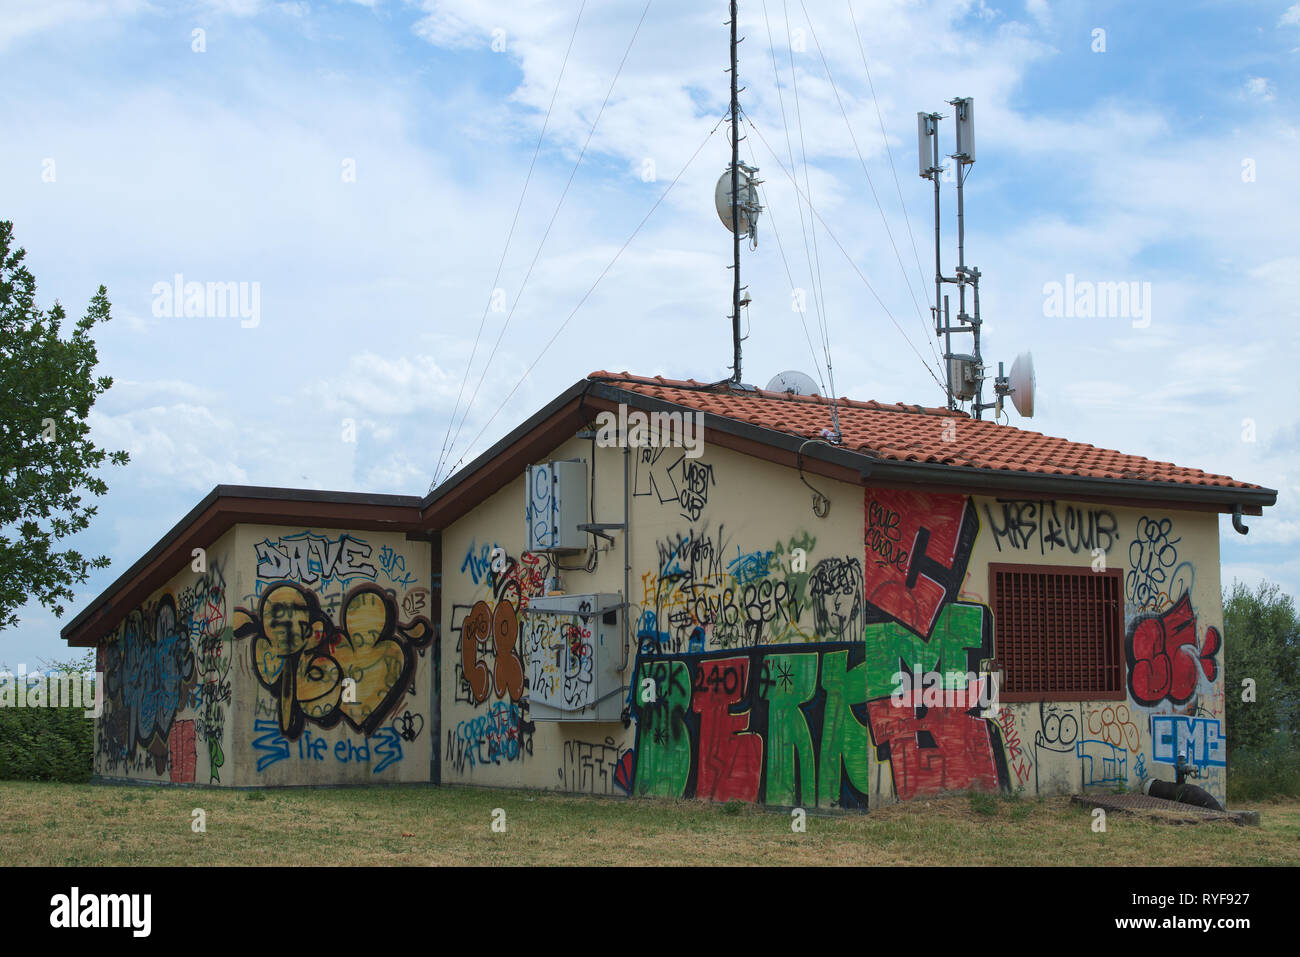 Transmitter house in Santarcangelo di Romagna with graffiti art Stock Photo